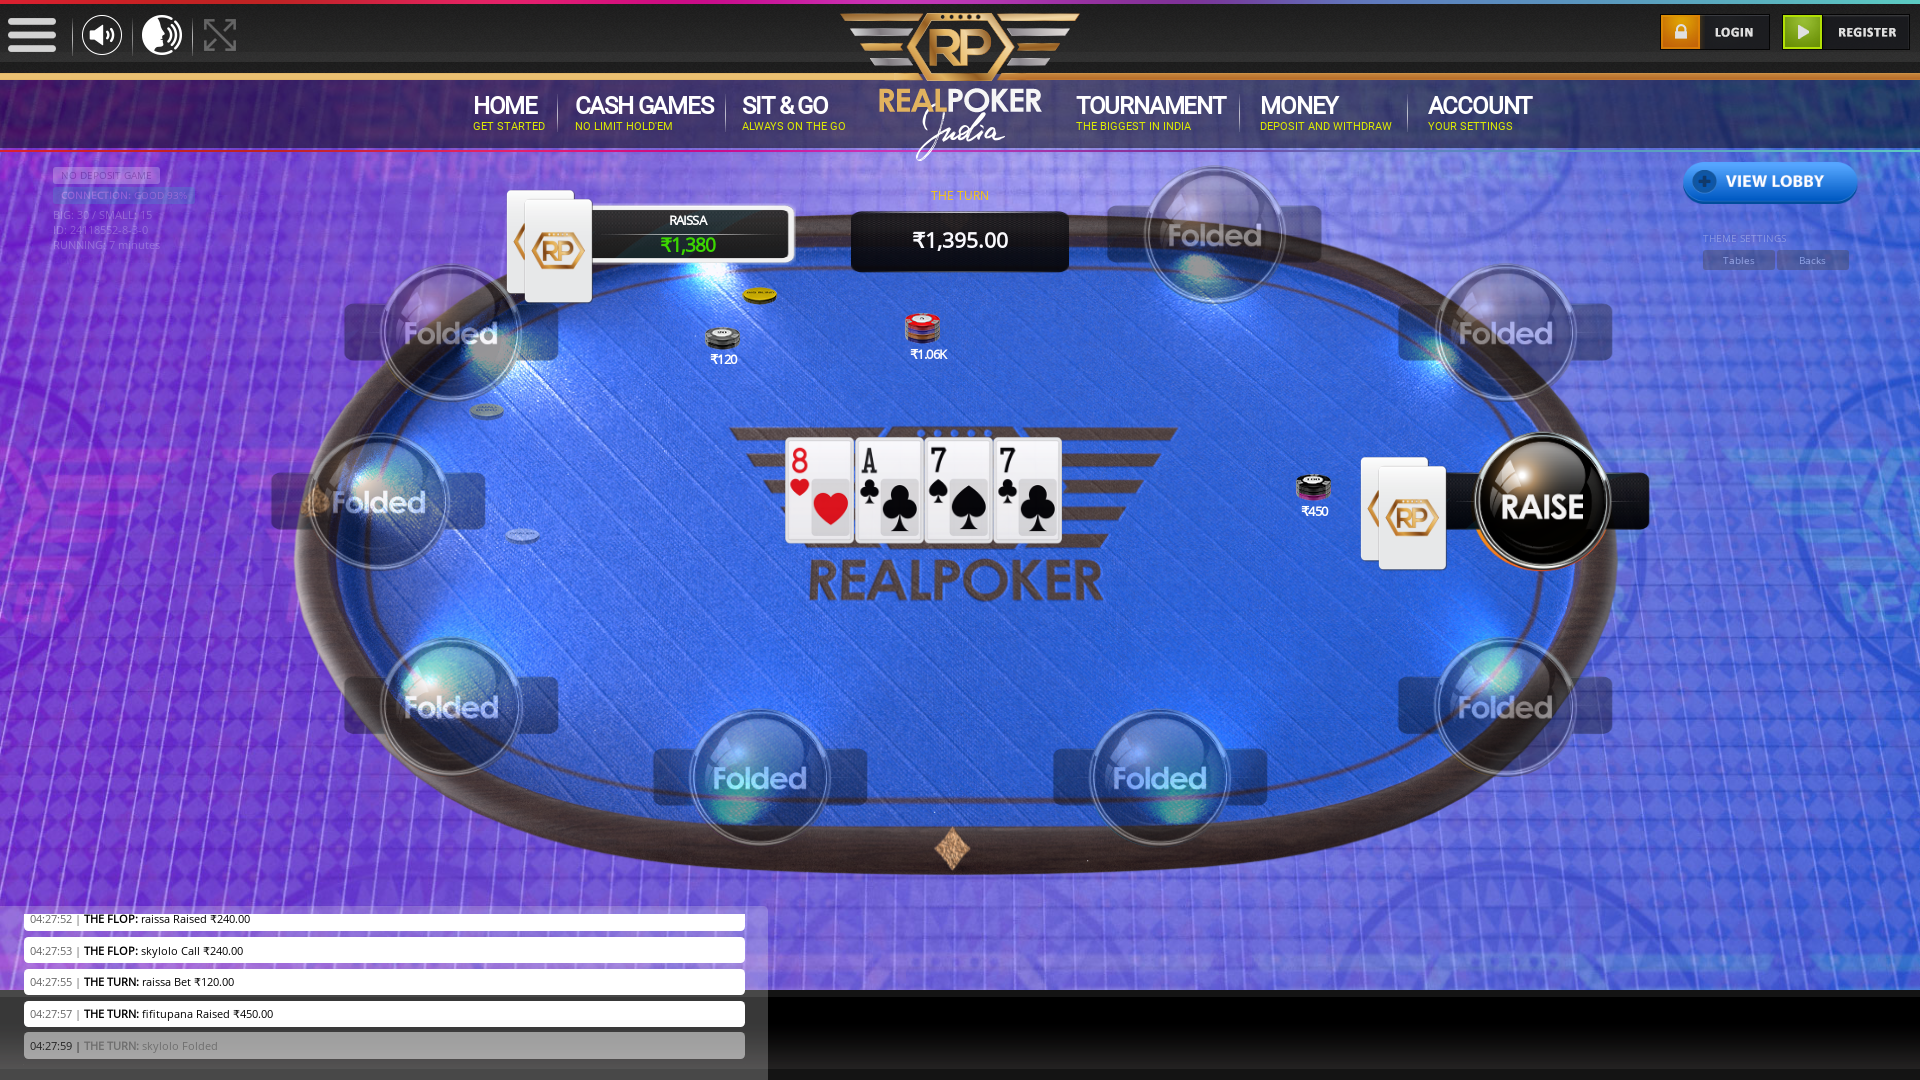 Quepem Goa online poker